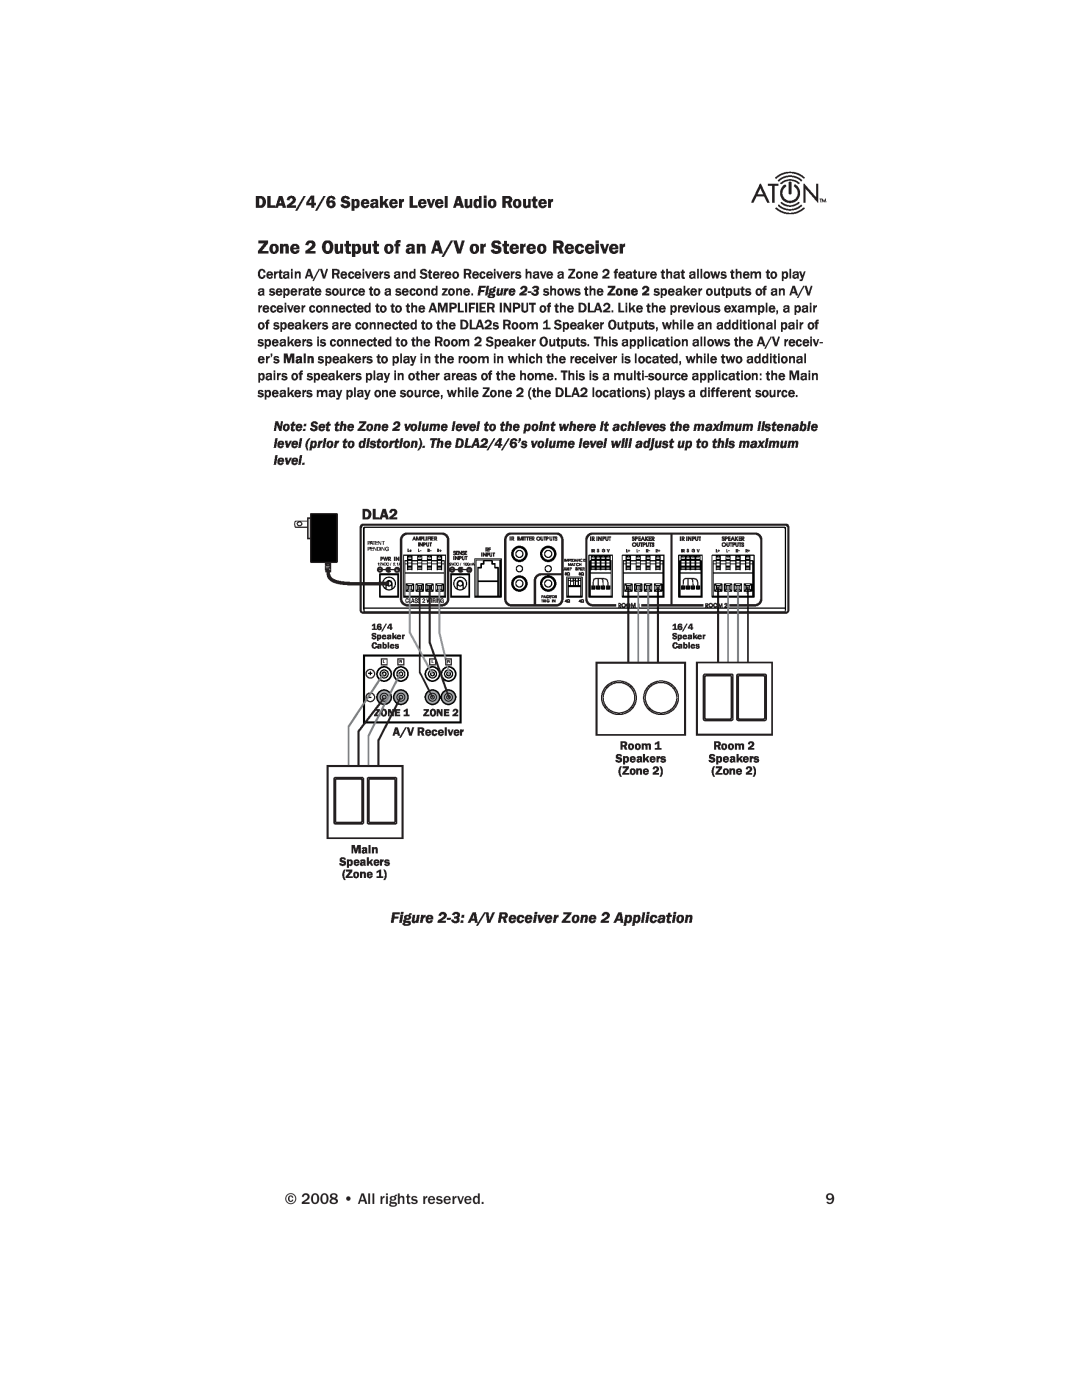 ATON DLA6, DLA4, DLA2 manual Zone 2 Output of an A/V or Stereo Receiver, 3 A/V Receiver Zone 2 Application 